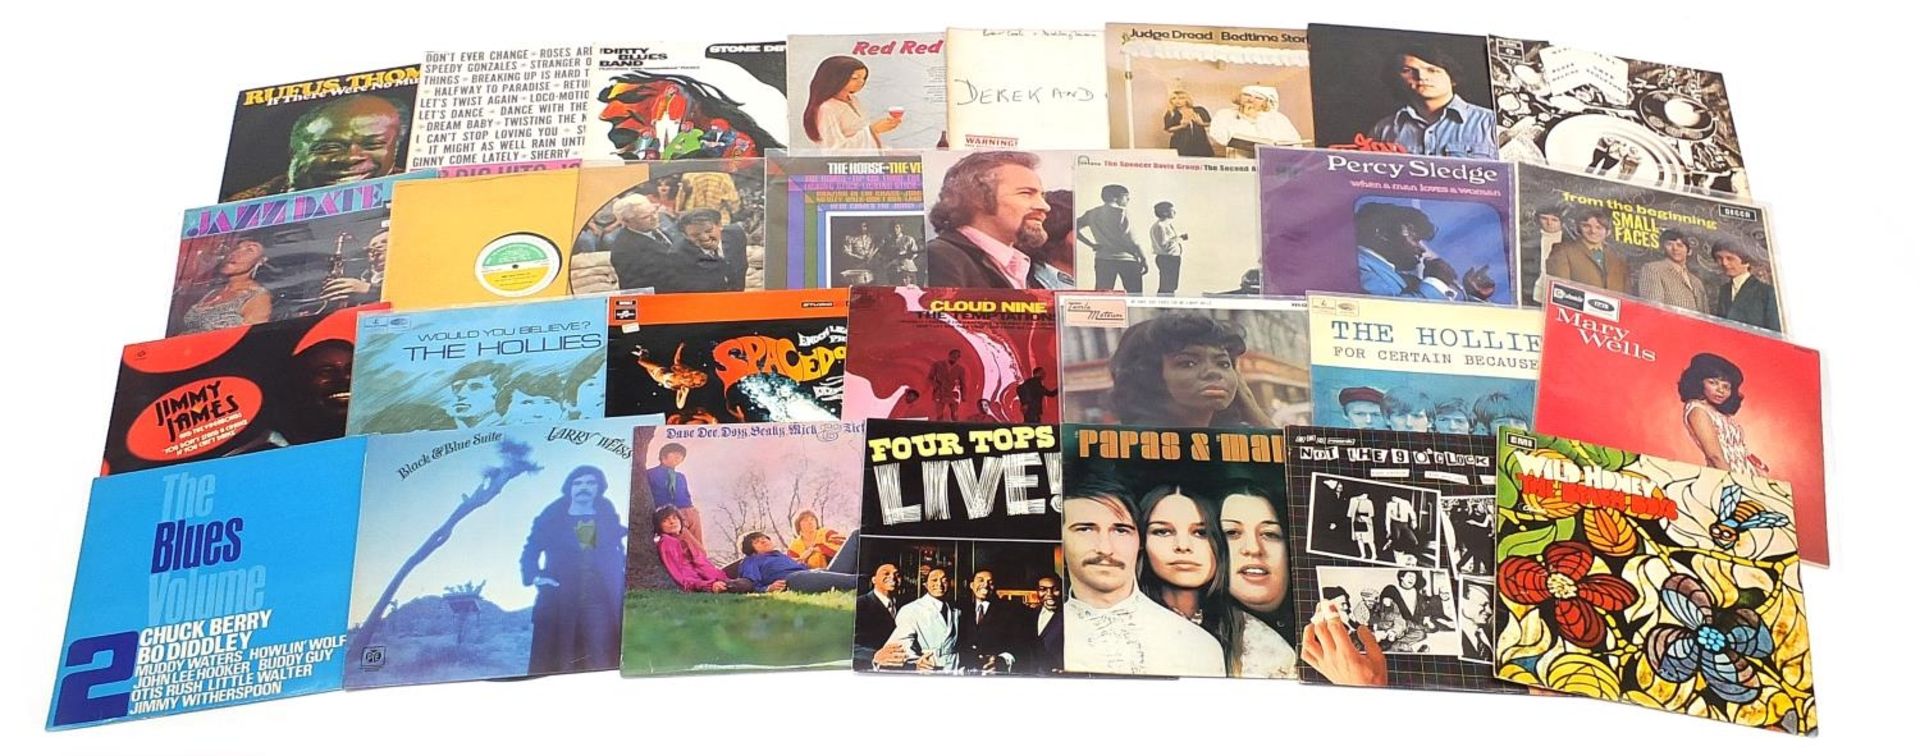 Vinyl LPs including BBC Transcription Services Jazz Club, Jazz Date, Spencer Davis Group and Judge